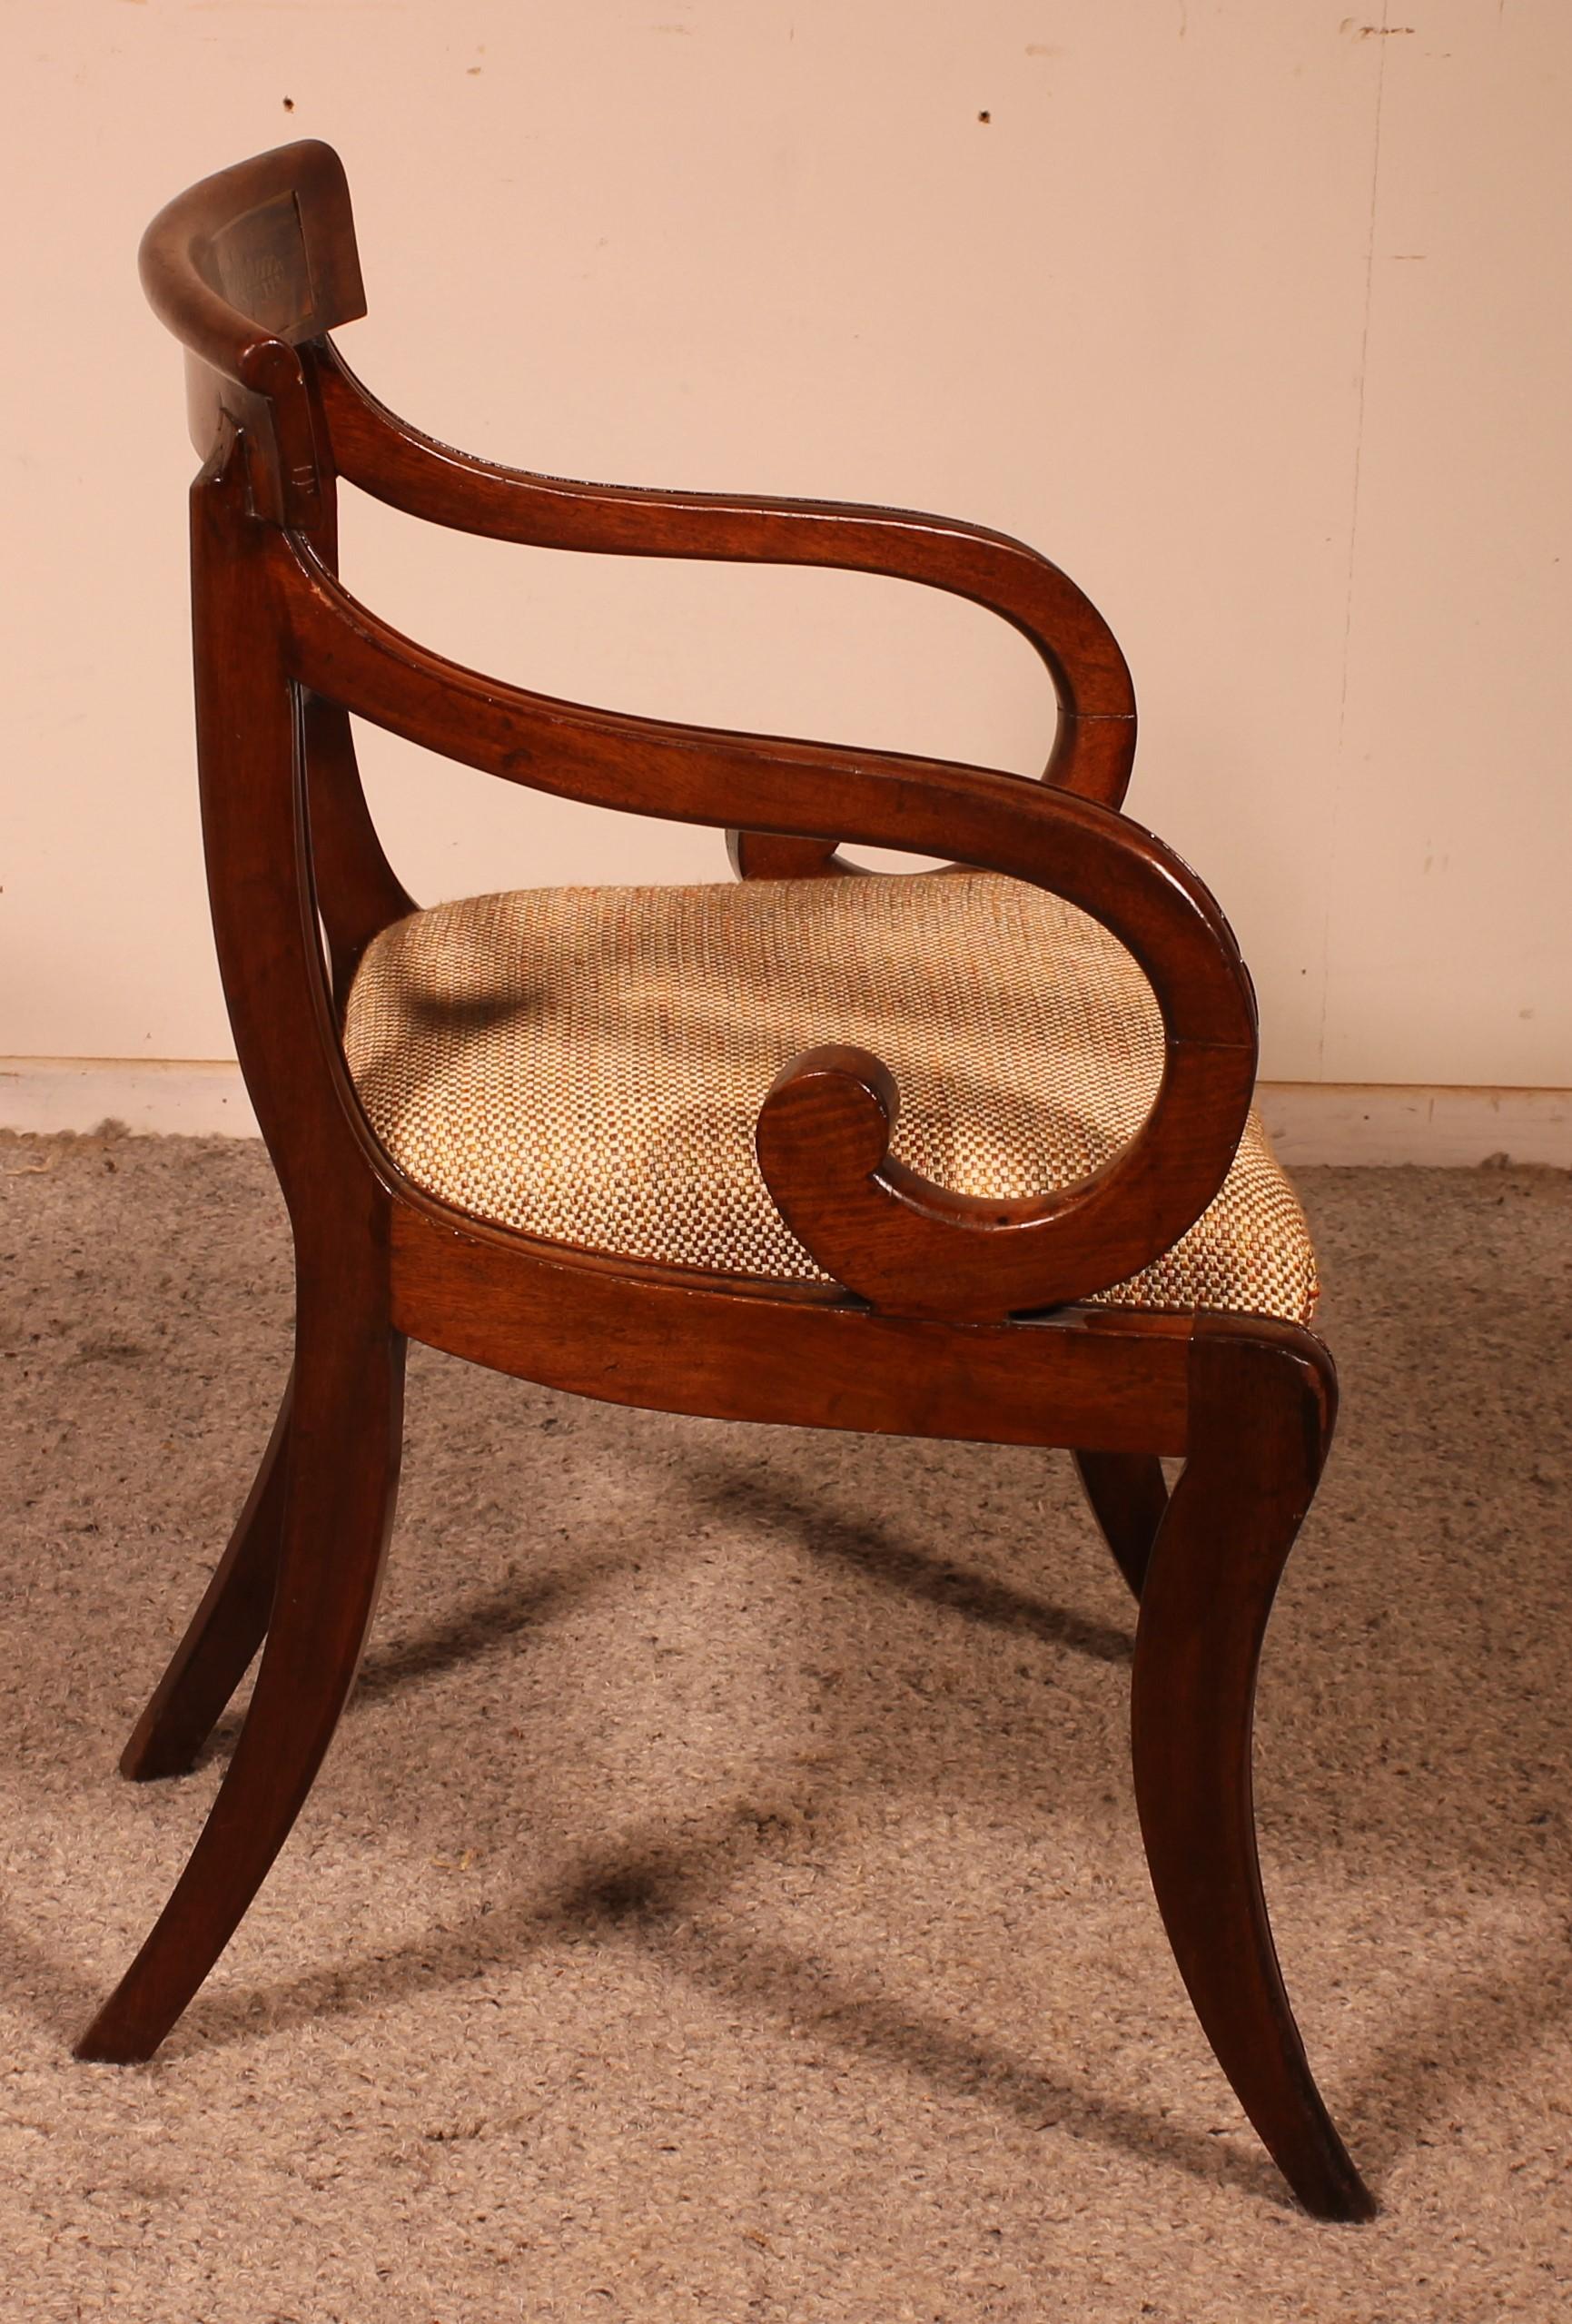 Walnut Regency Mahogany Armchair Chair, Early 19th Century, Circa 1810